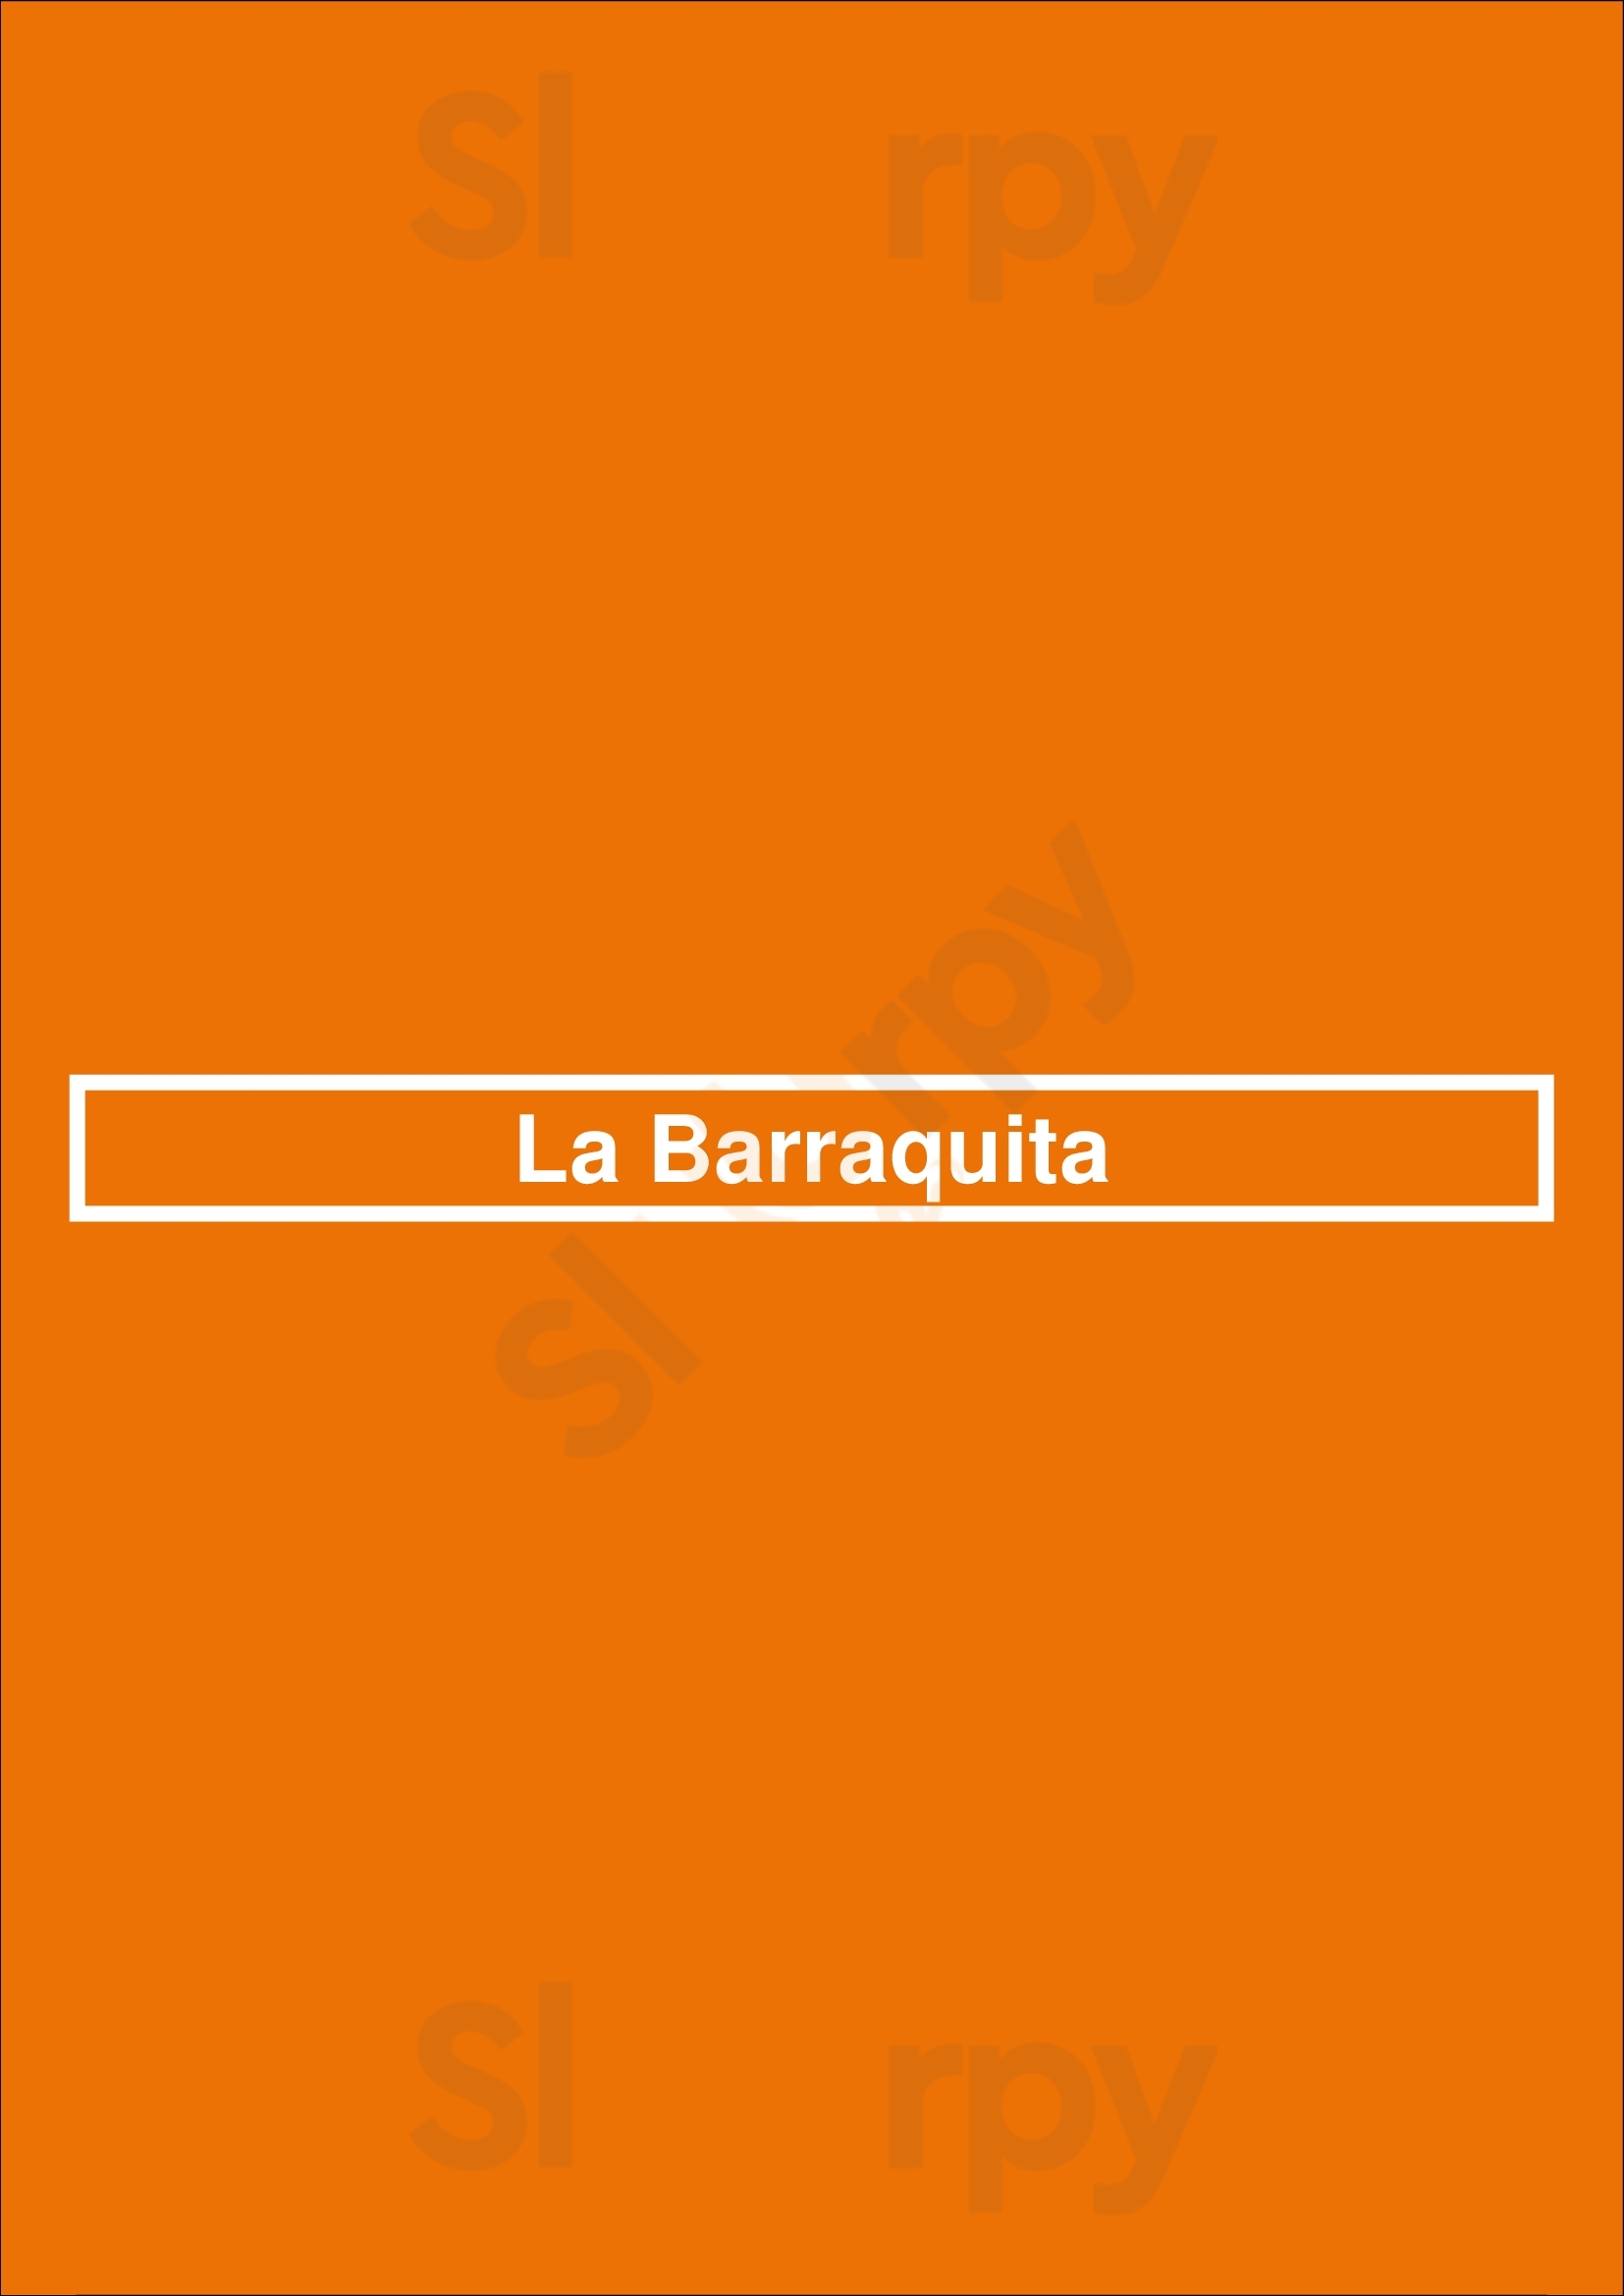 La Barraquita Valencia Menu - 1